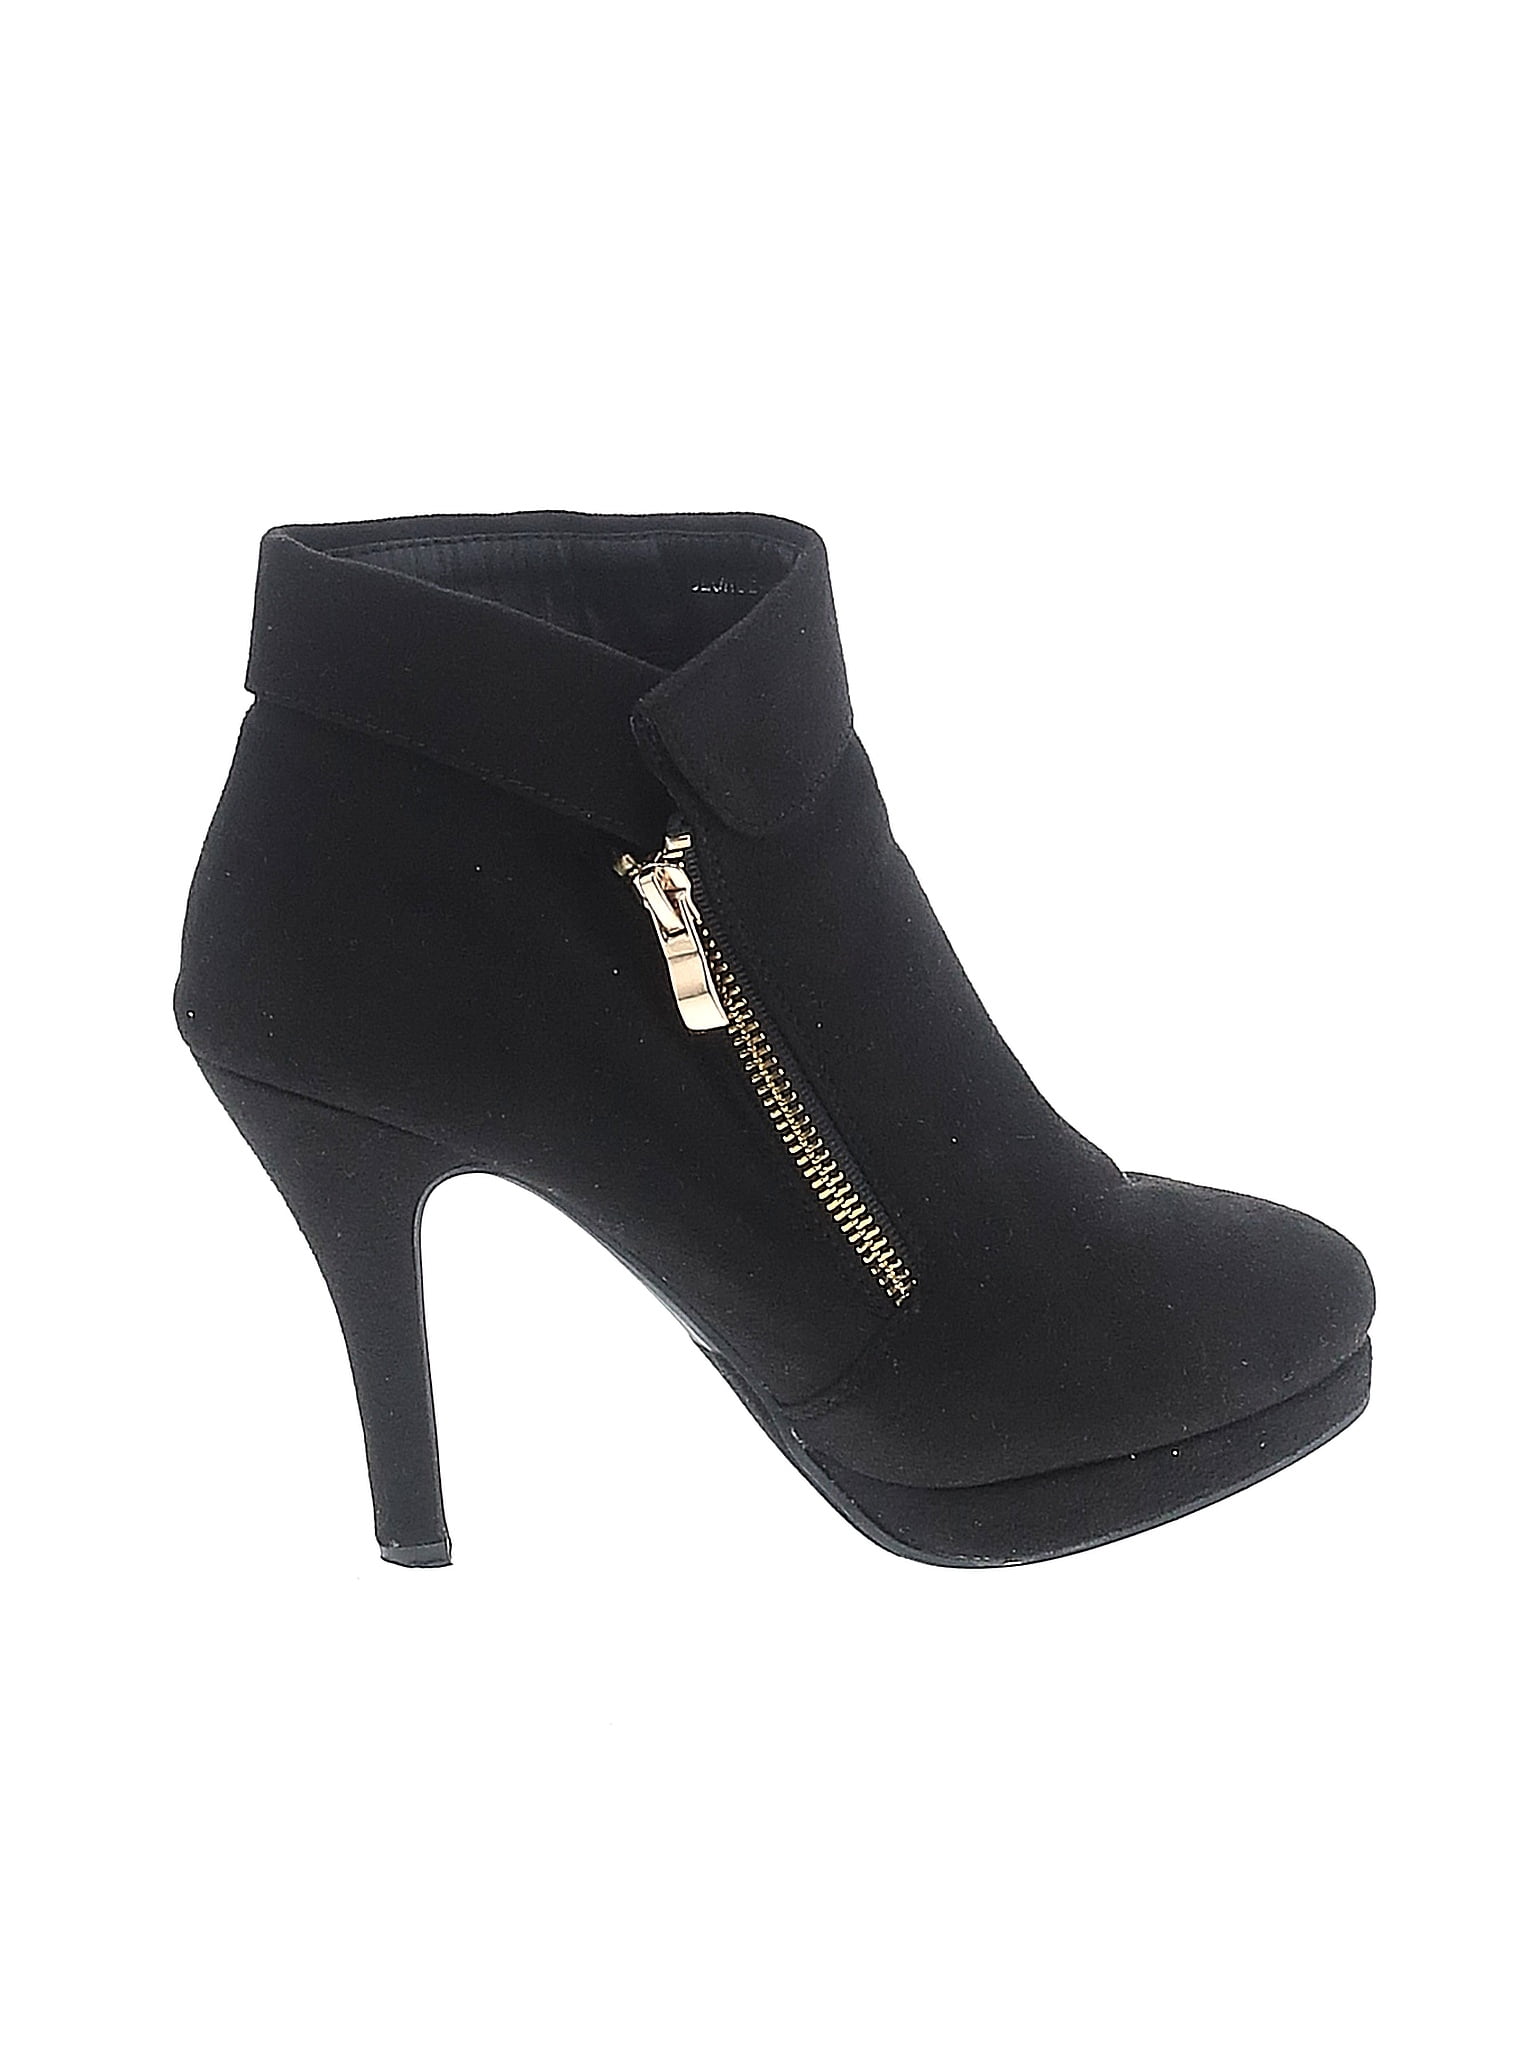 Assorted Brands Solid Black Ankle Boots Size 7 1/2 - 51% off | thredUP